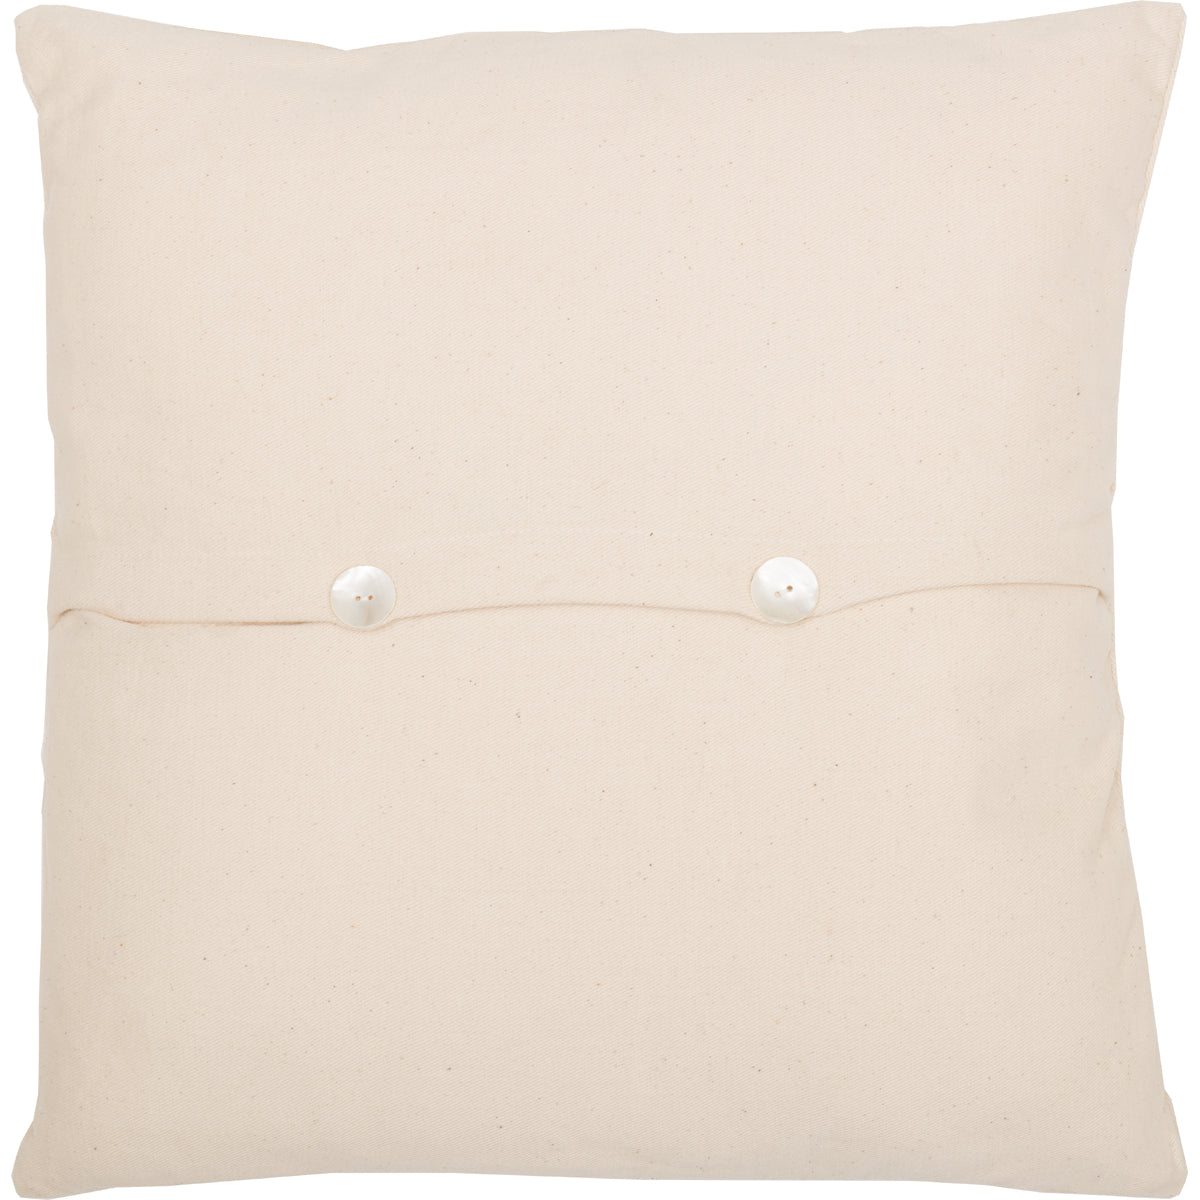 Seasons Crest Three Starfish Pillow 18x18 By VHC Brands